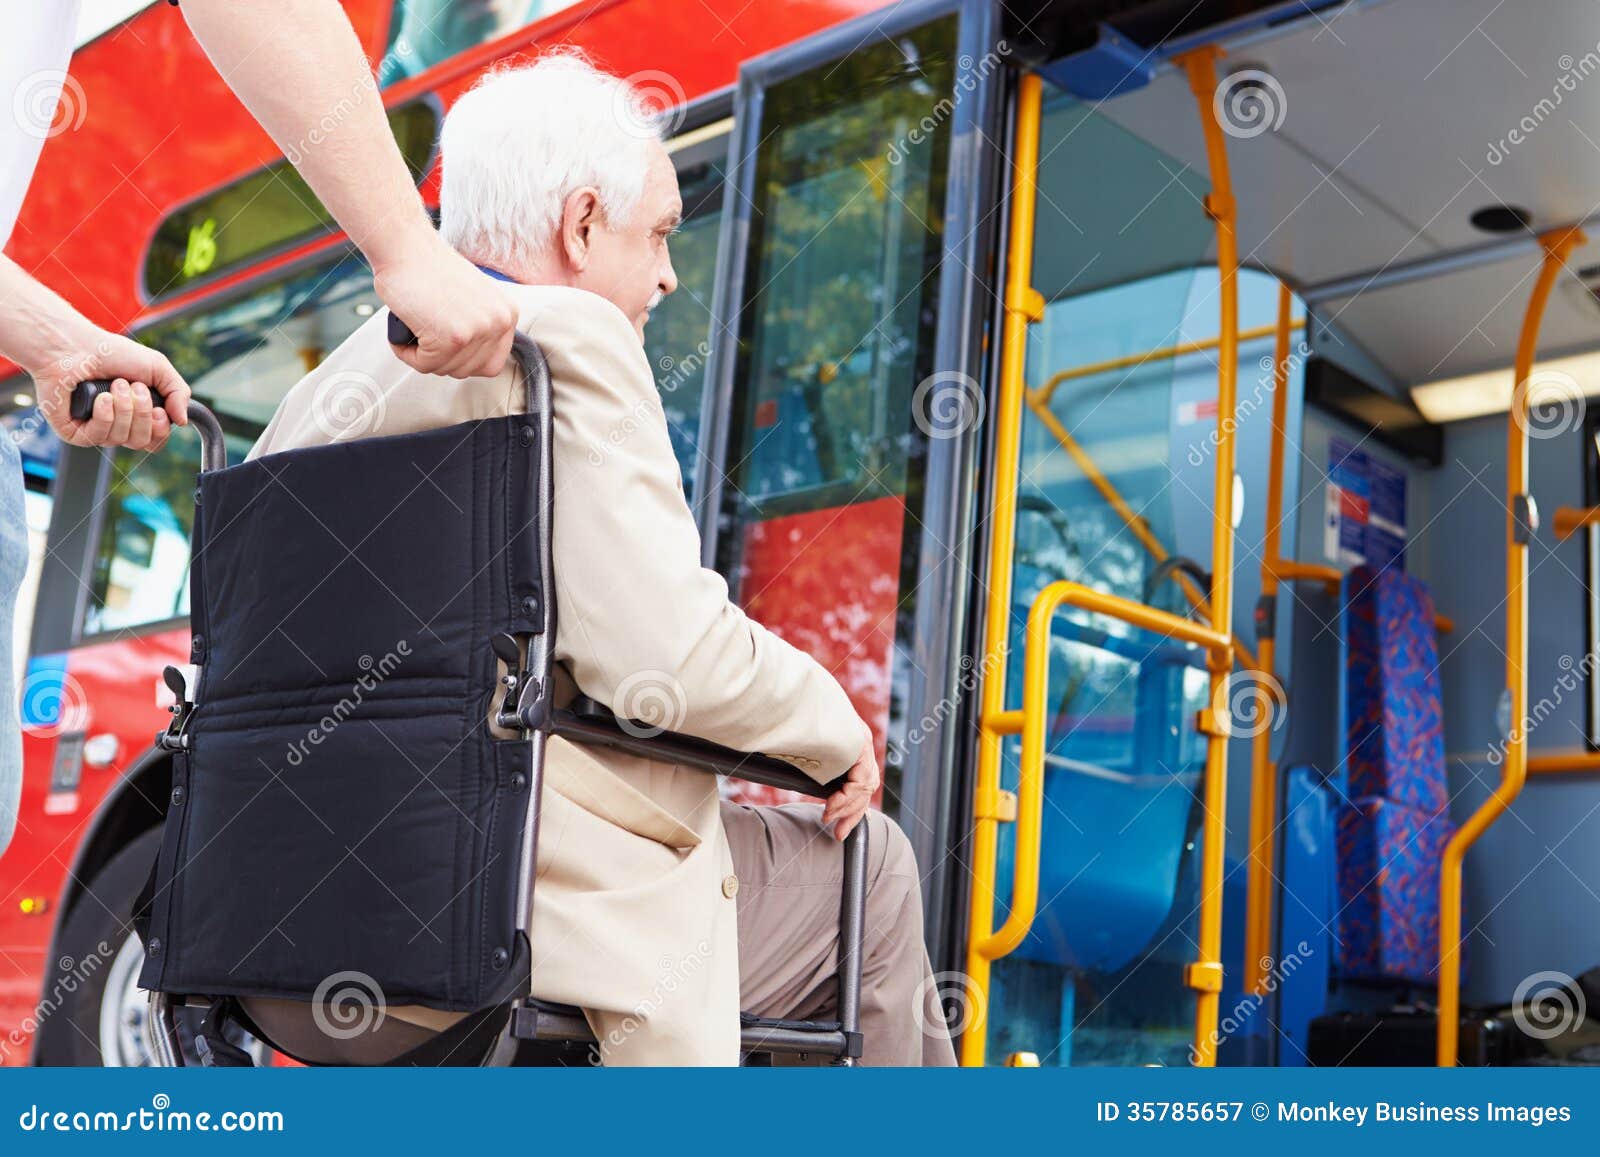 senior couple boarding bus using wheelchair access ramp